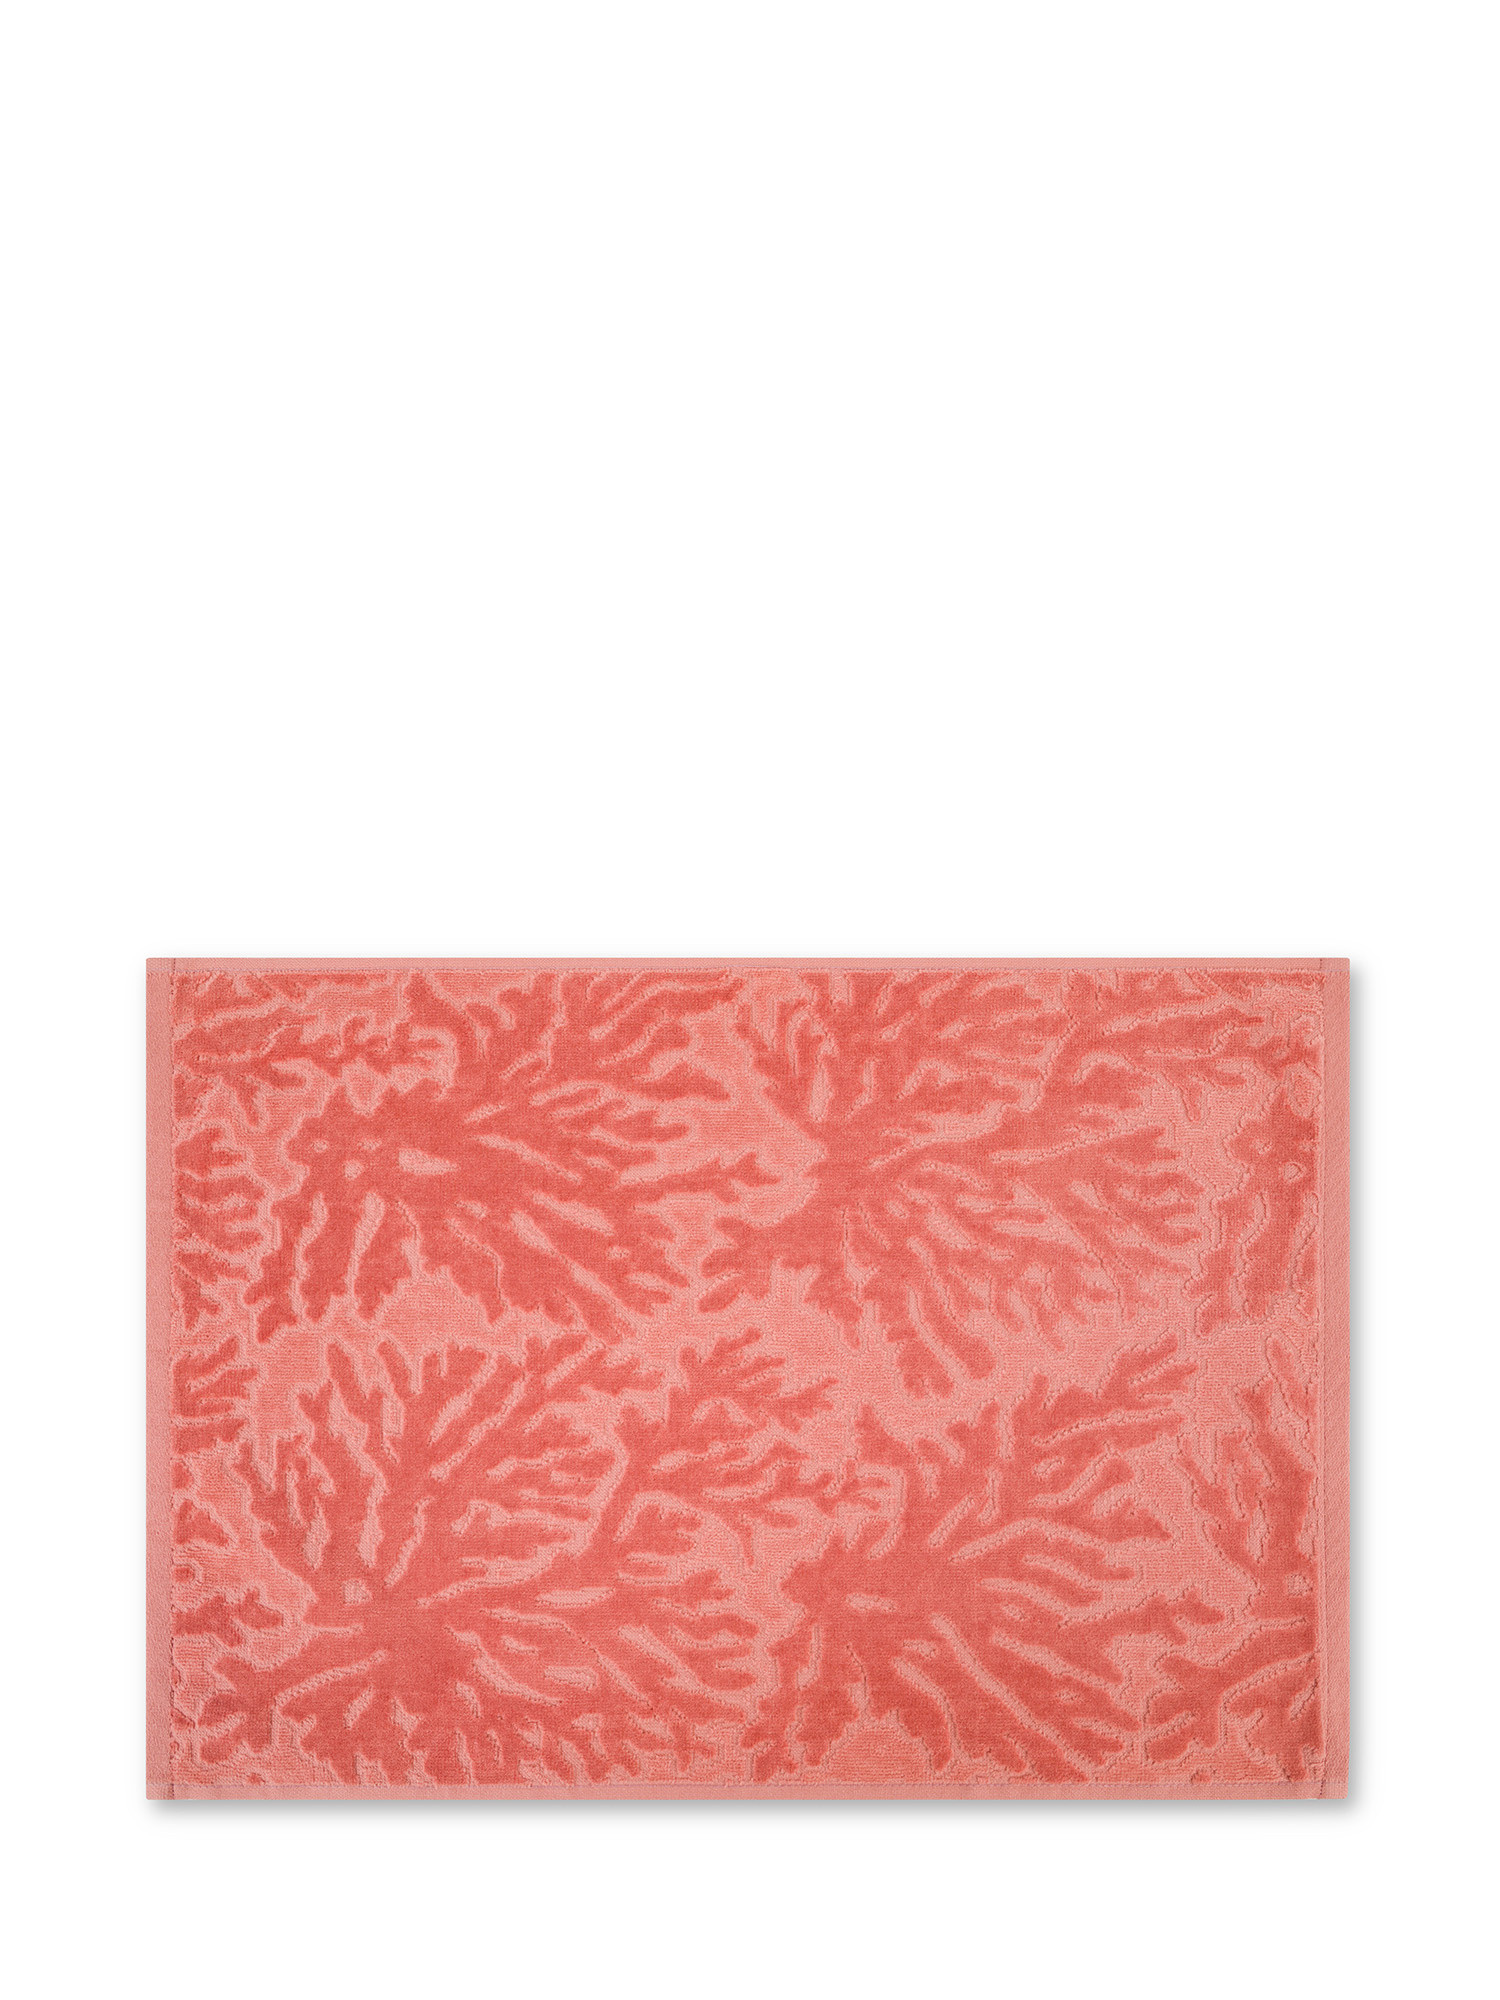 Asciugamano cotone velour motivo floreale a rilievo, Rosa, large image number 1